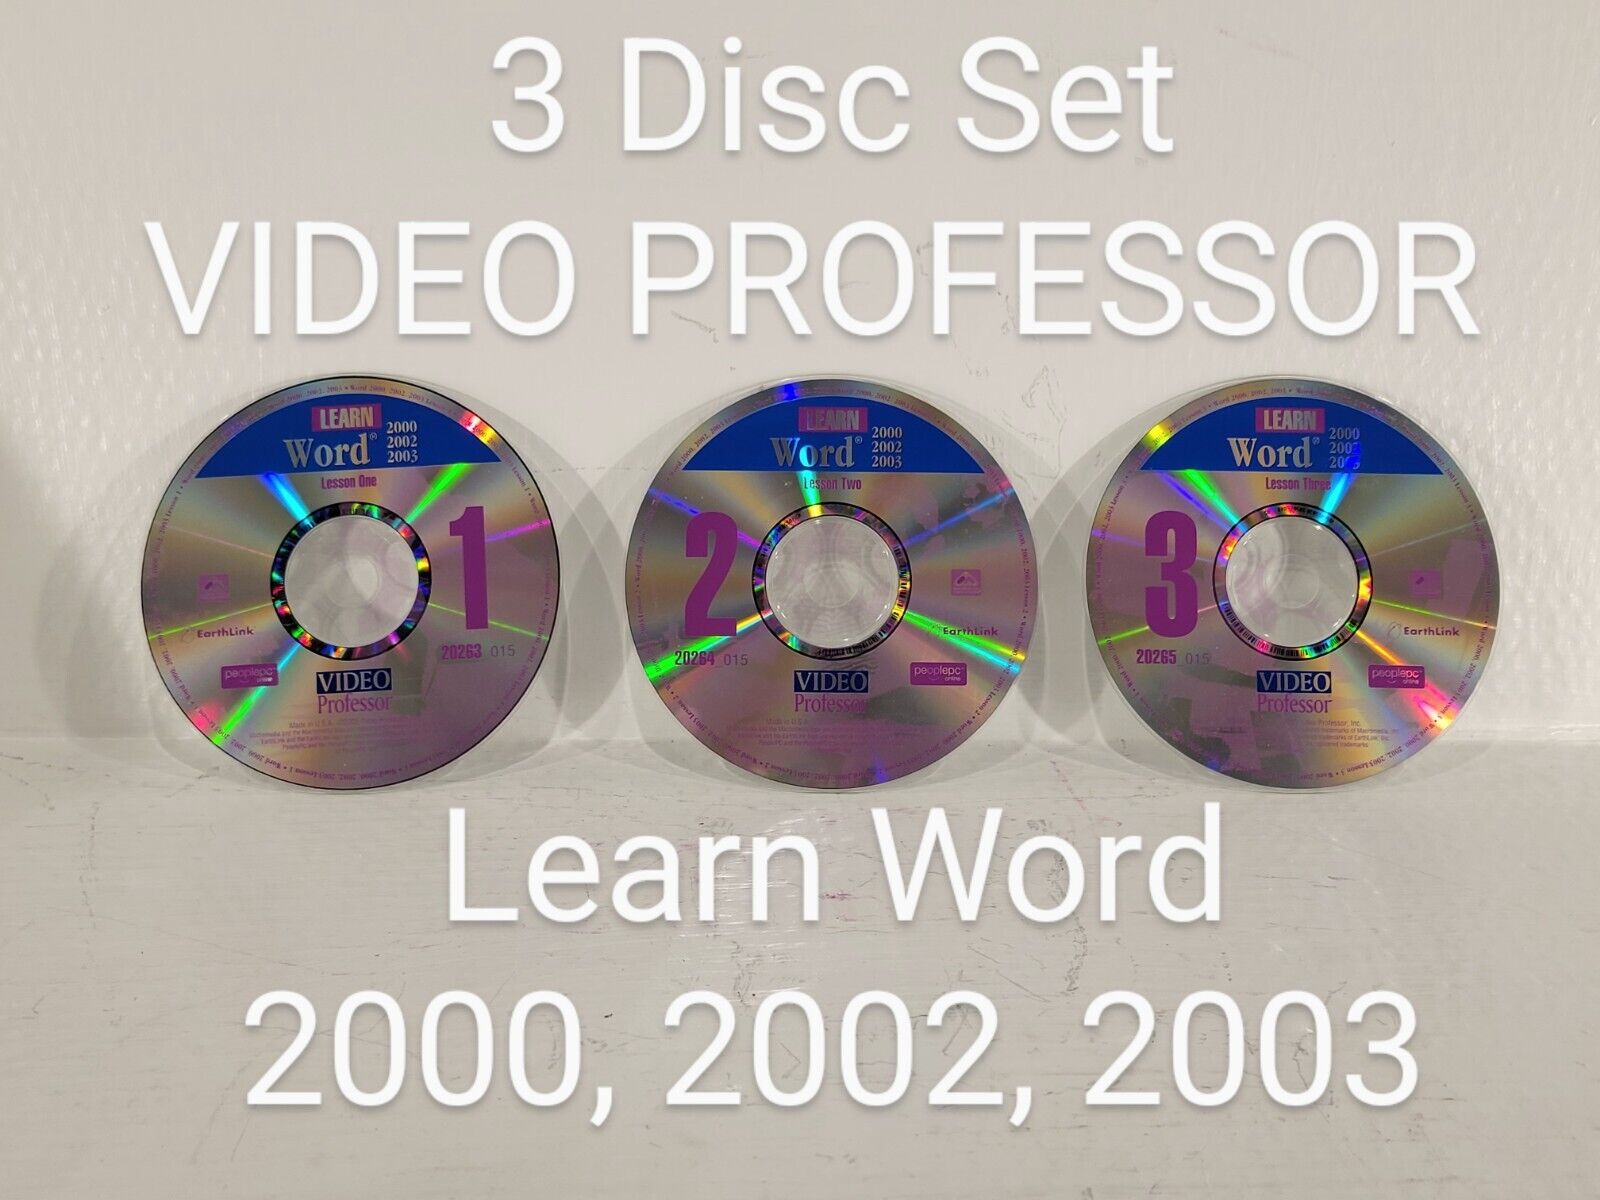 Video Professor Learn Word 2000-2002-2003 , 3-CD Set - PC CD-ROM Slighty Used